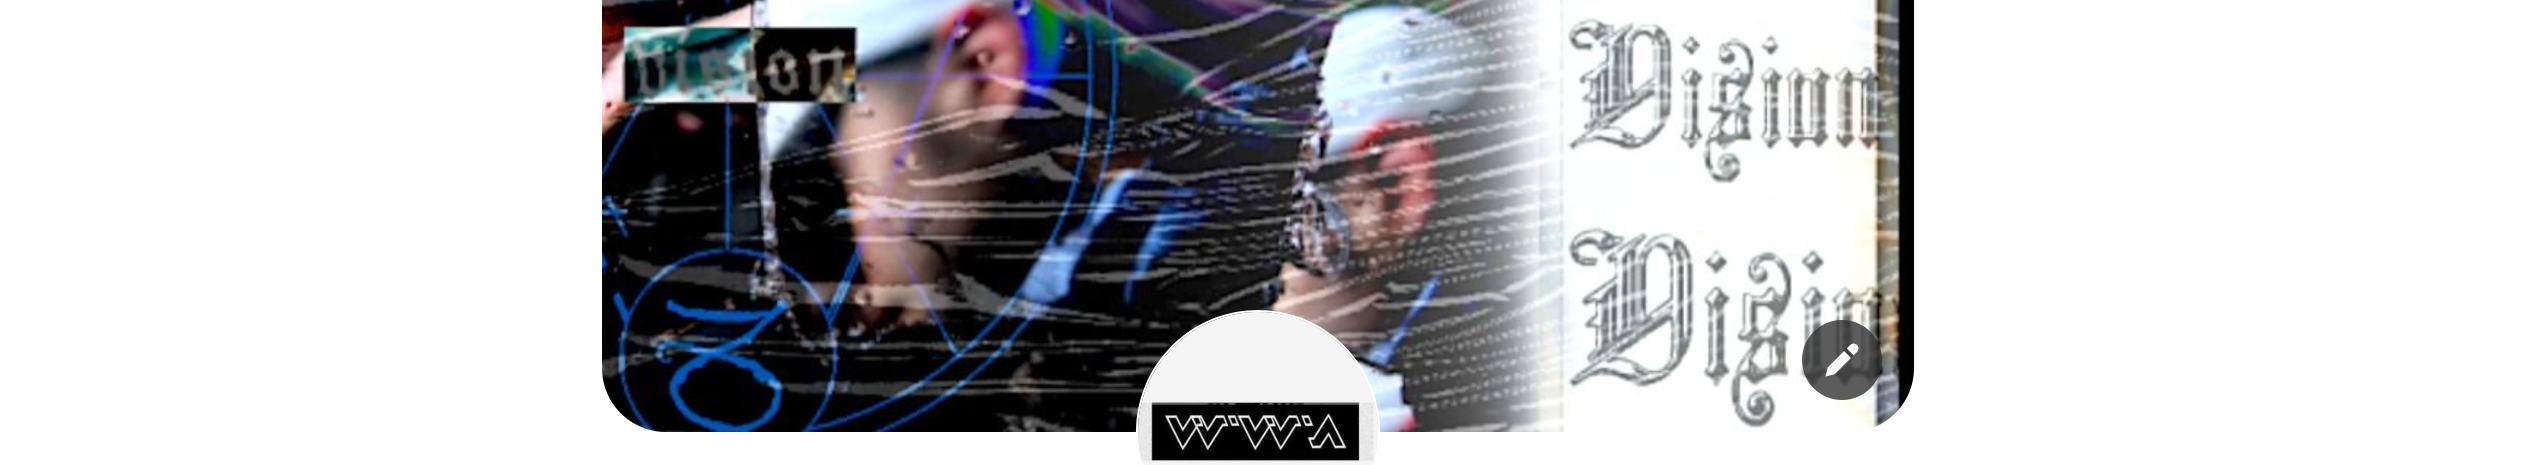 Banner profilu uživatele WWA whitewolfart